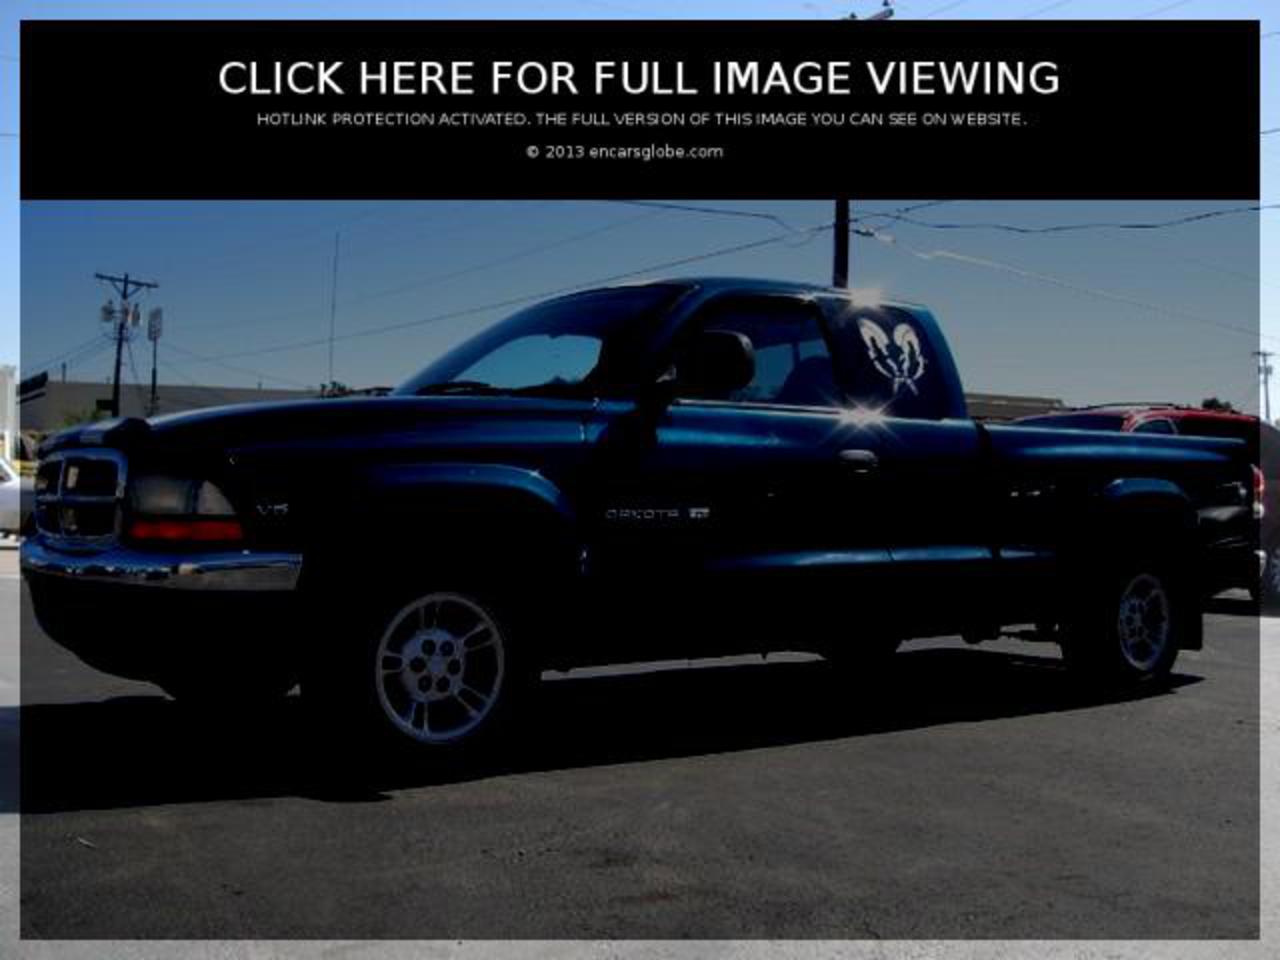 Dodge Dakota Magnun V6 Photo Gallery: Photo #08 out of 9, Image ...